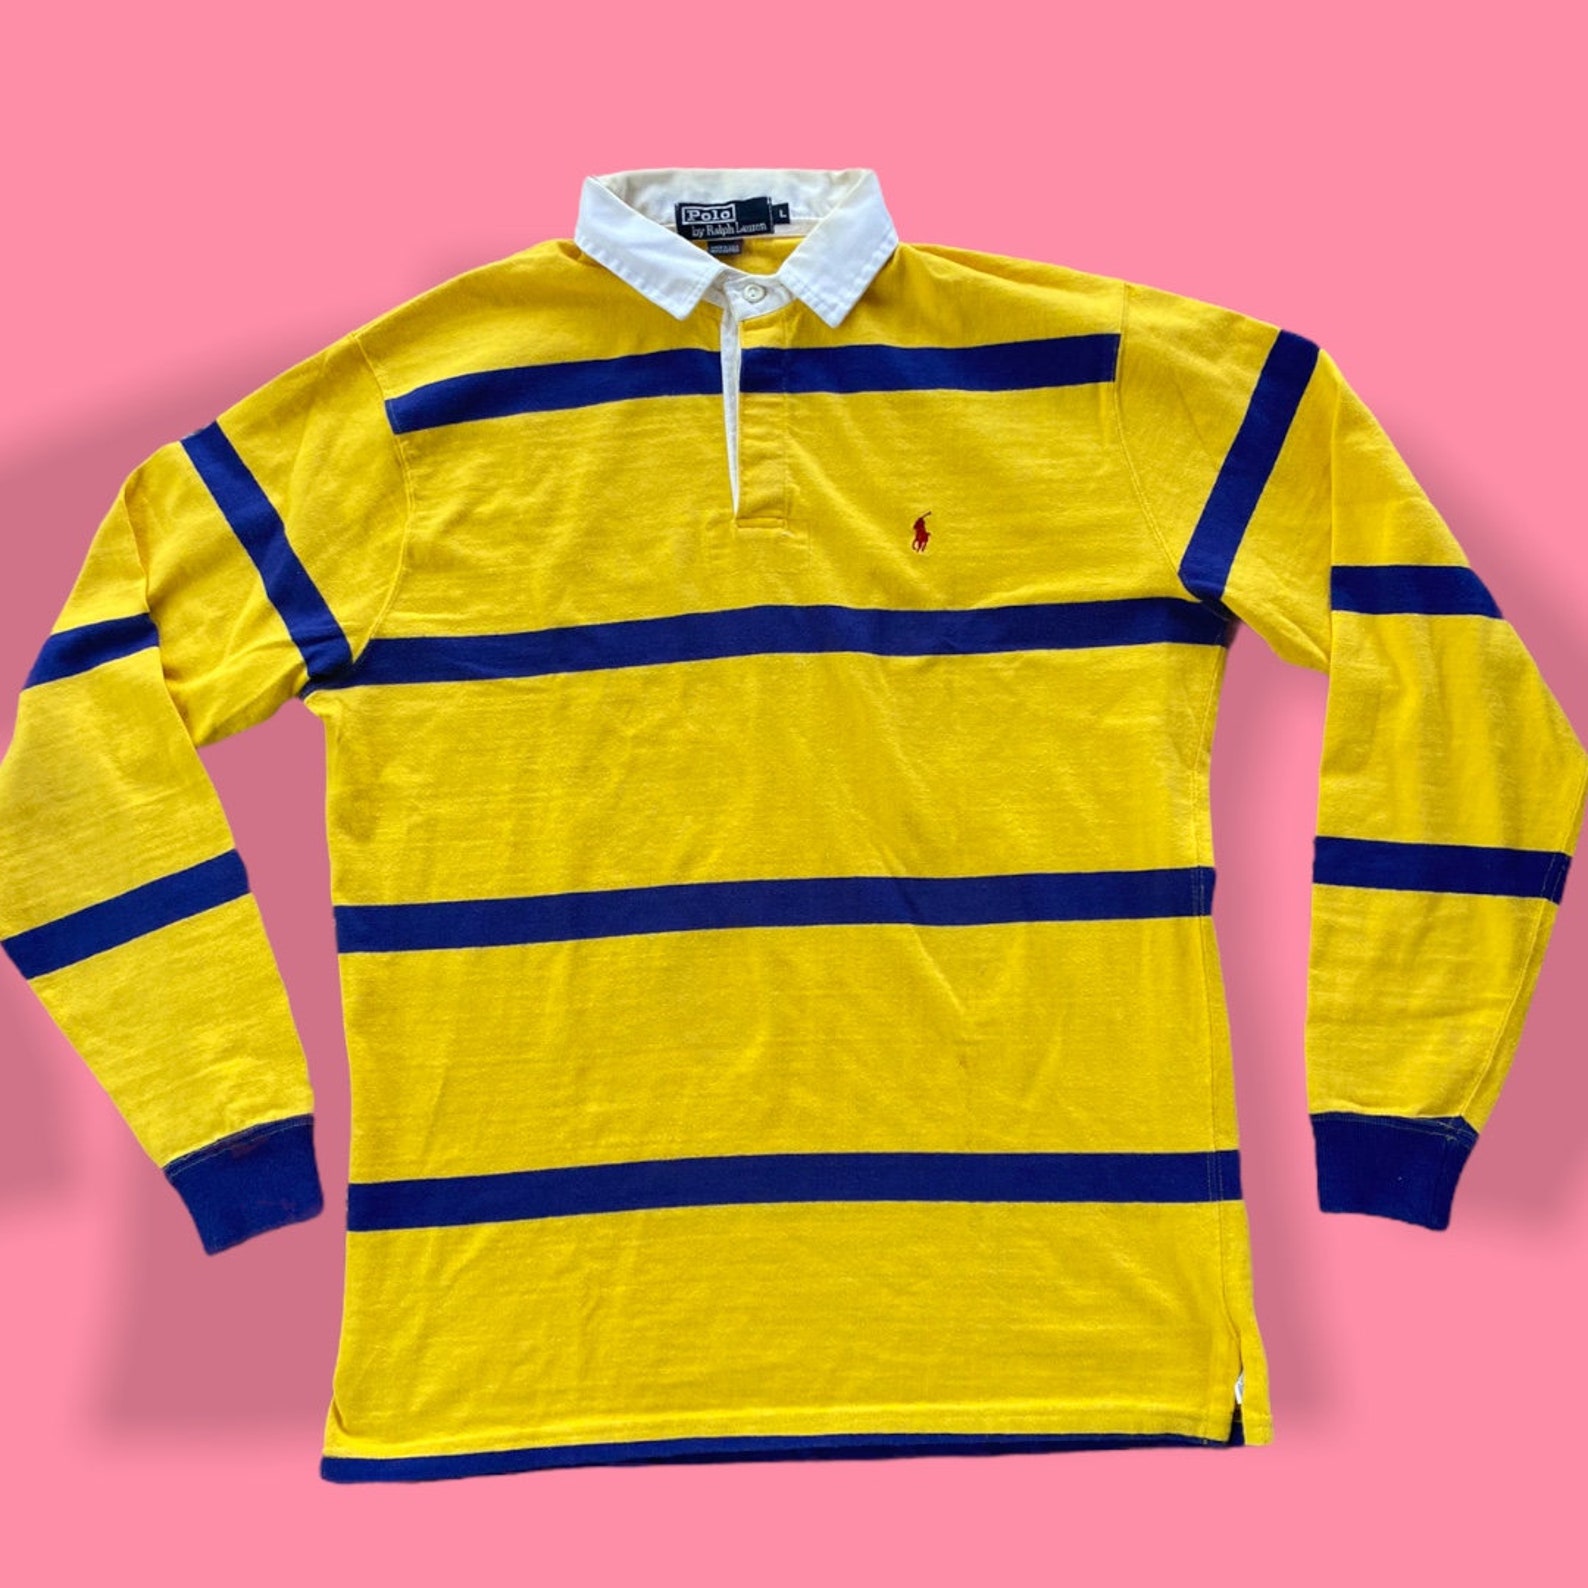 Vintage 80s/90s Ralph Lauren Striped Retro Rugby Jersey | Etsy